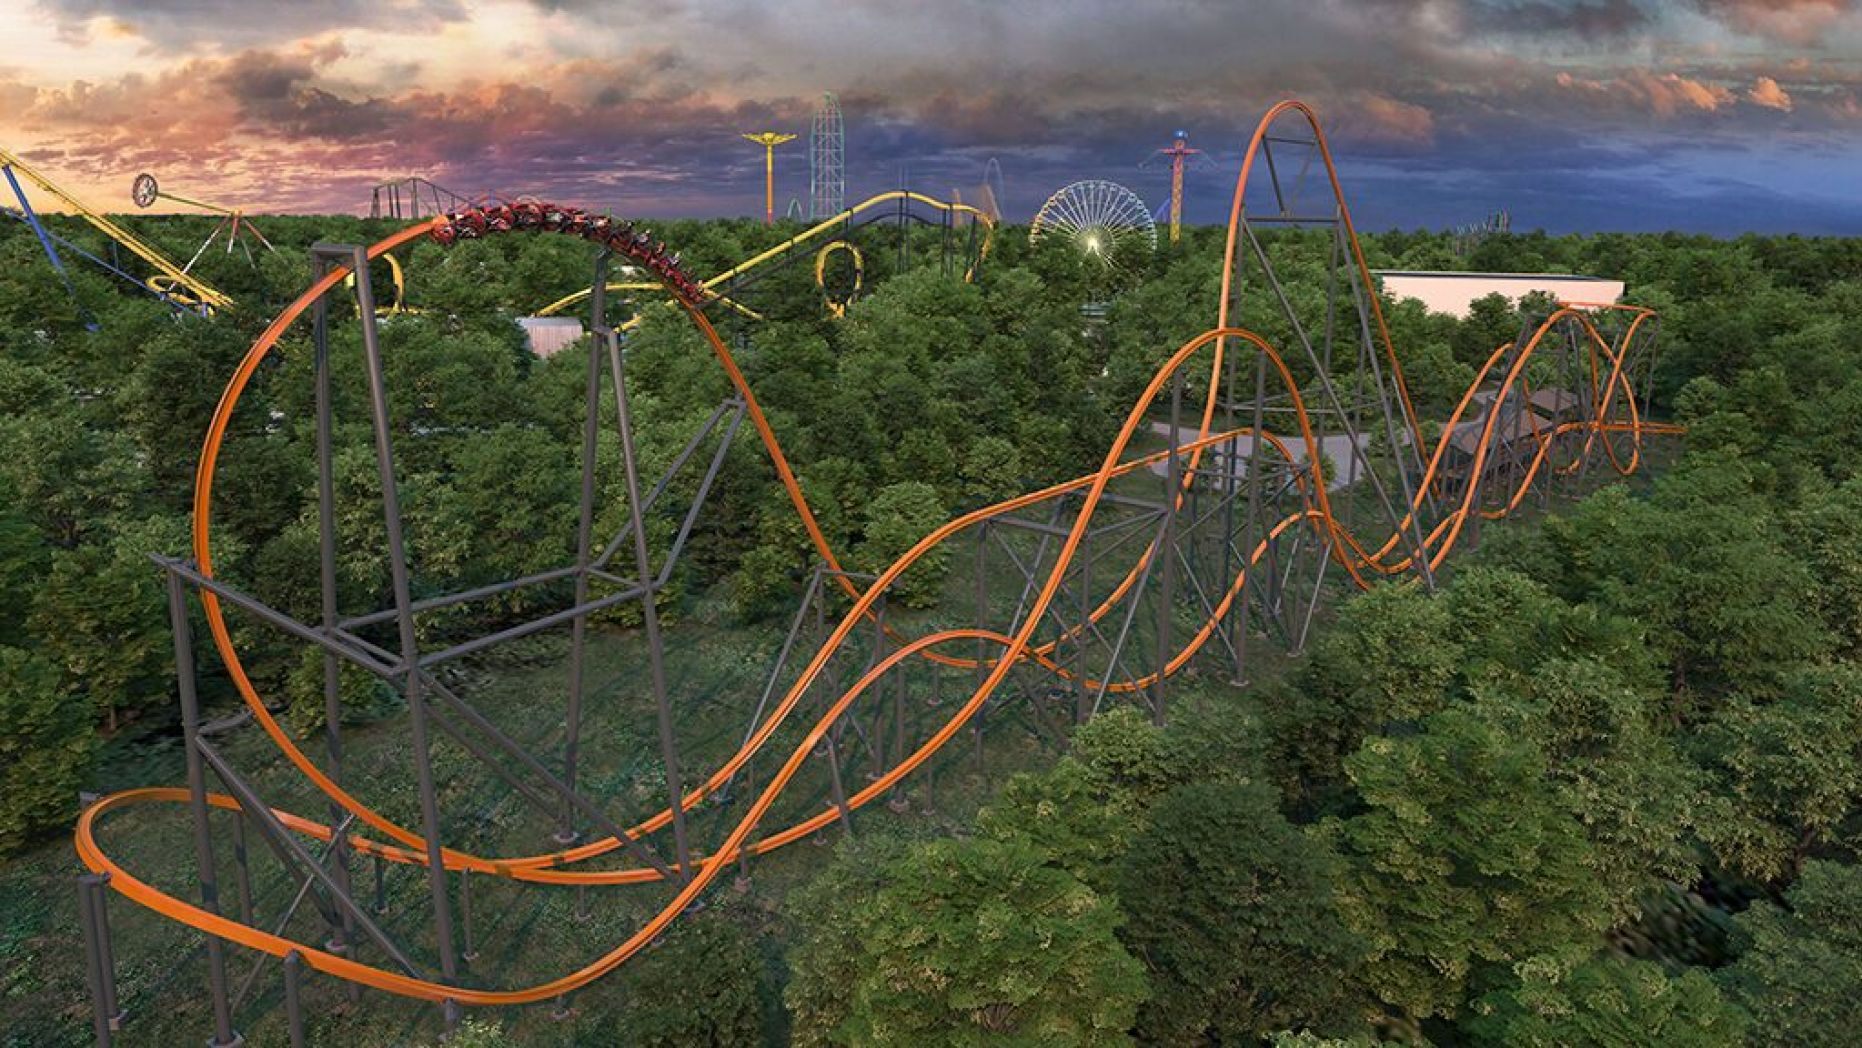 Six Flags’ Jersey Devil ride will be ‘world’s tallest, fastest, longest’ single rail coaster